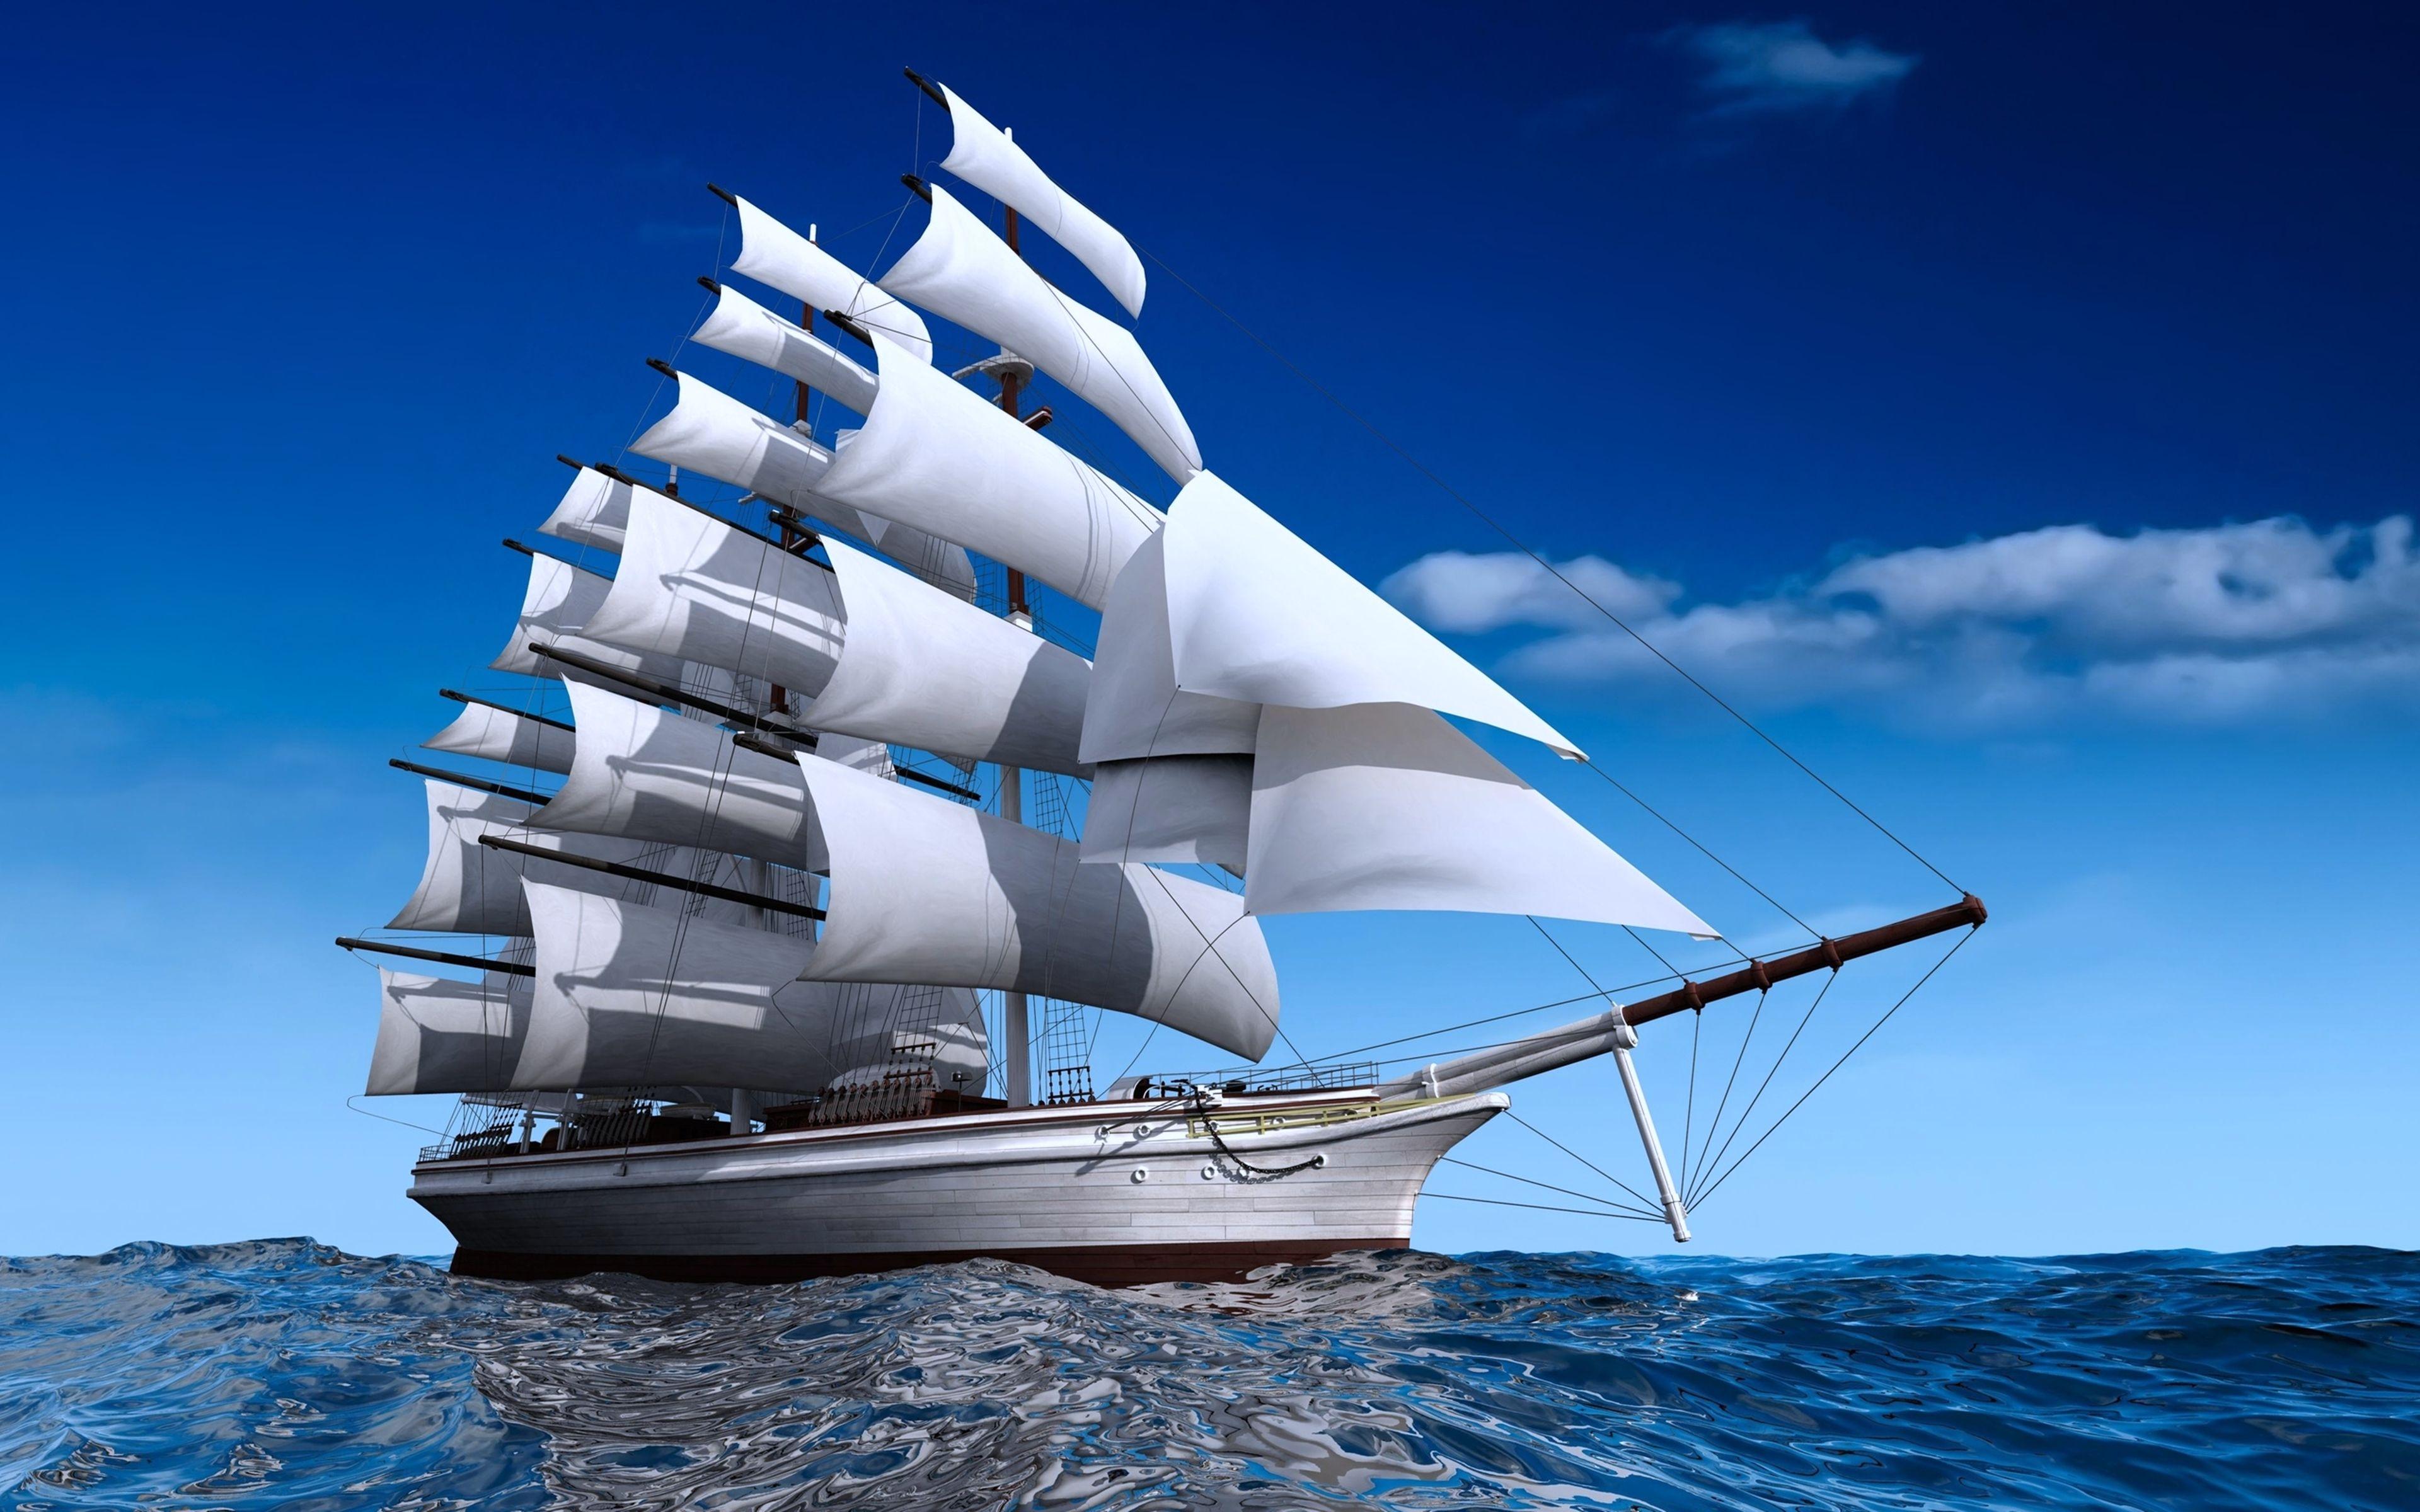 HD Sailing Ship Wallpaper, Background, Image. Design Trends